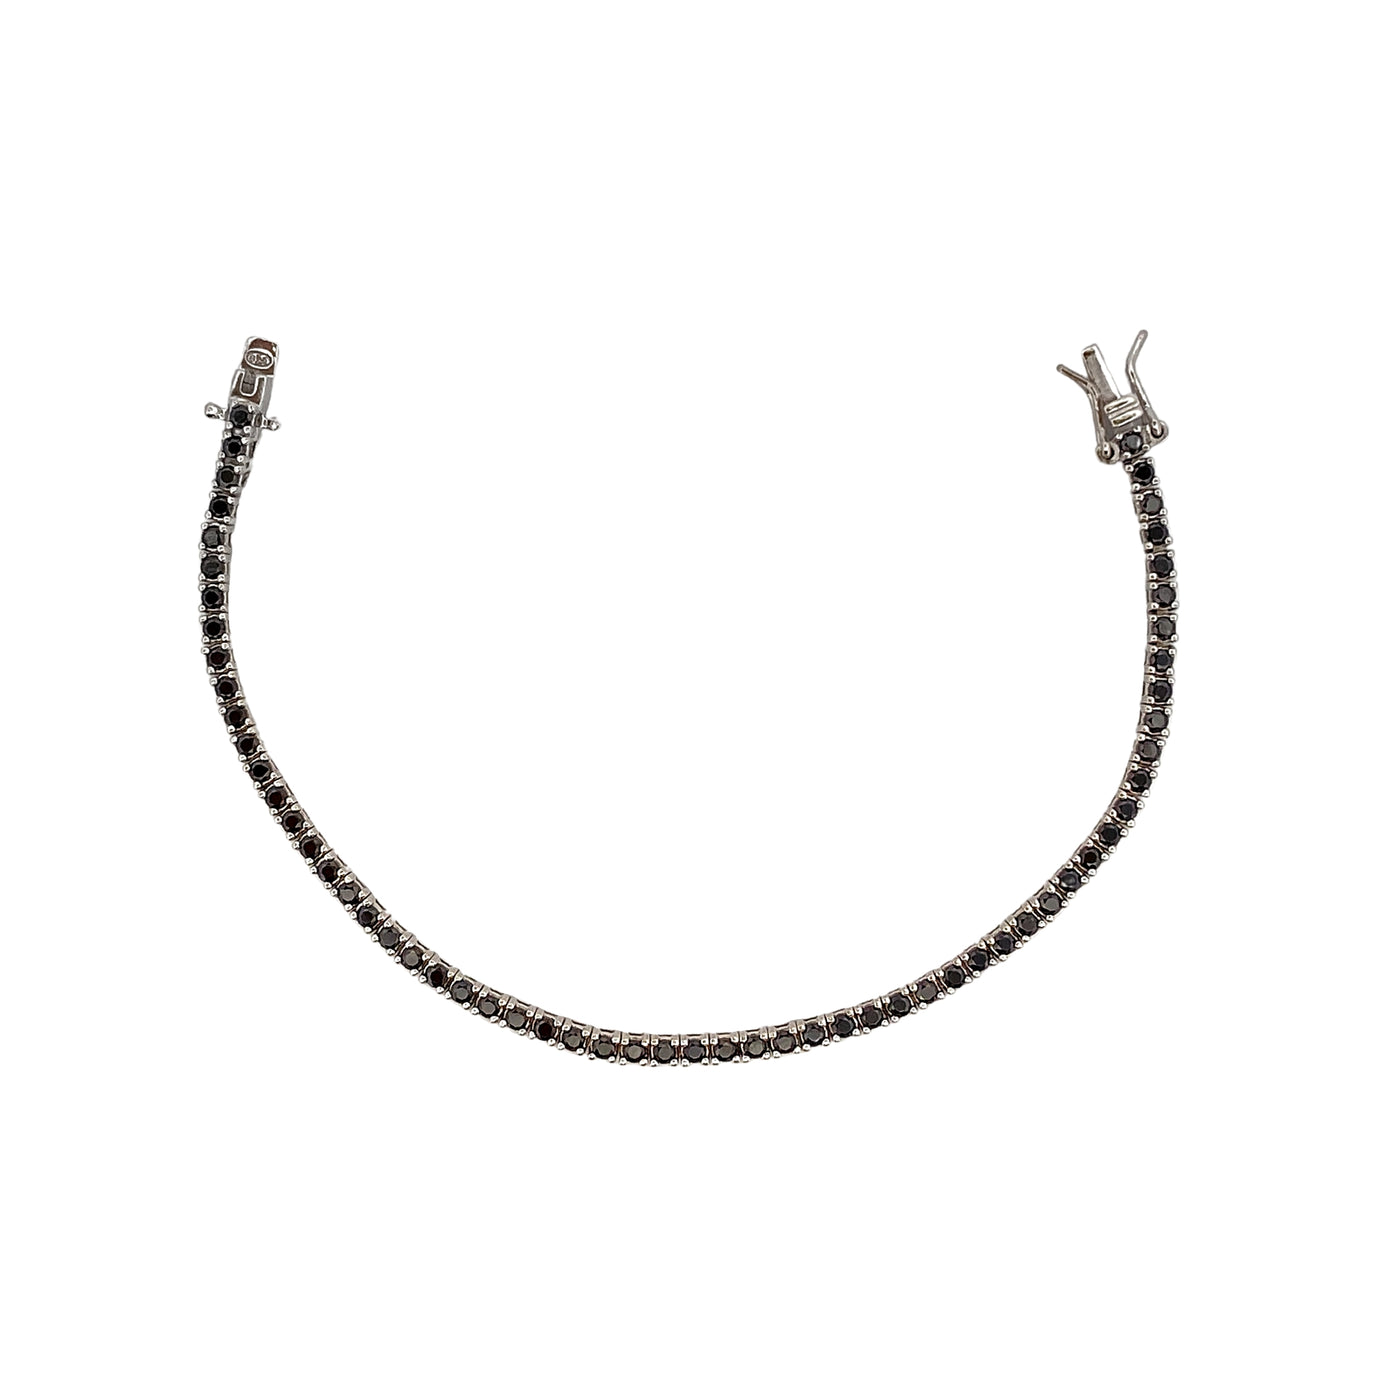 Silver casting tennis bracelet with black zirconia - 2 mm